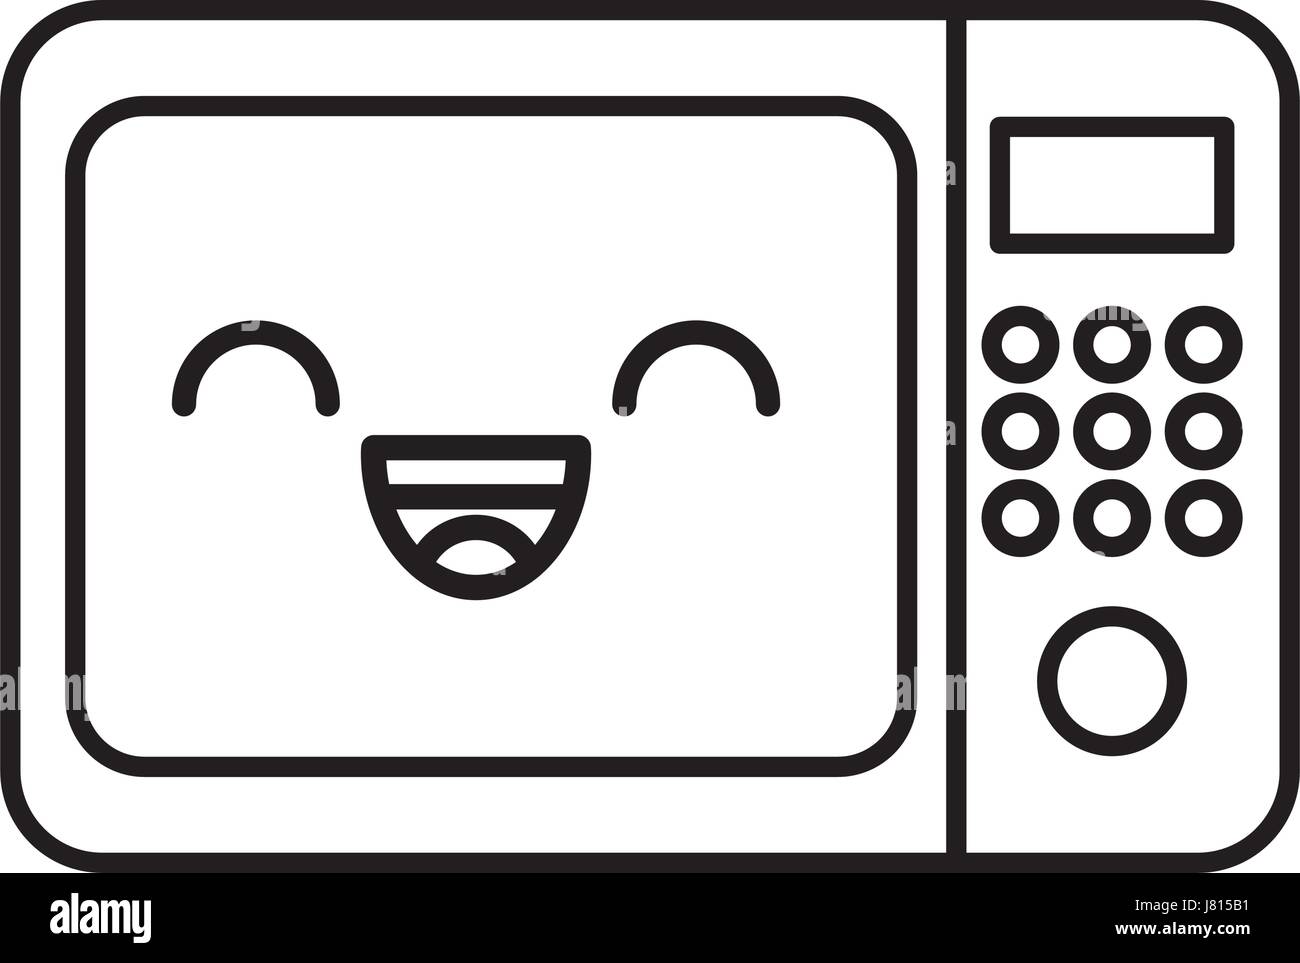 Cute Cartoon Image Of A Kawaii Microwave, Car Drawing, Cartoon